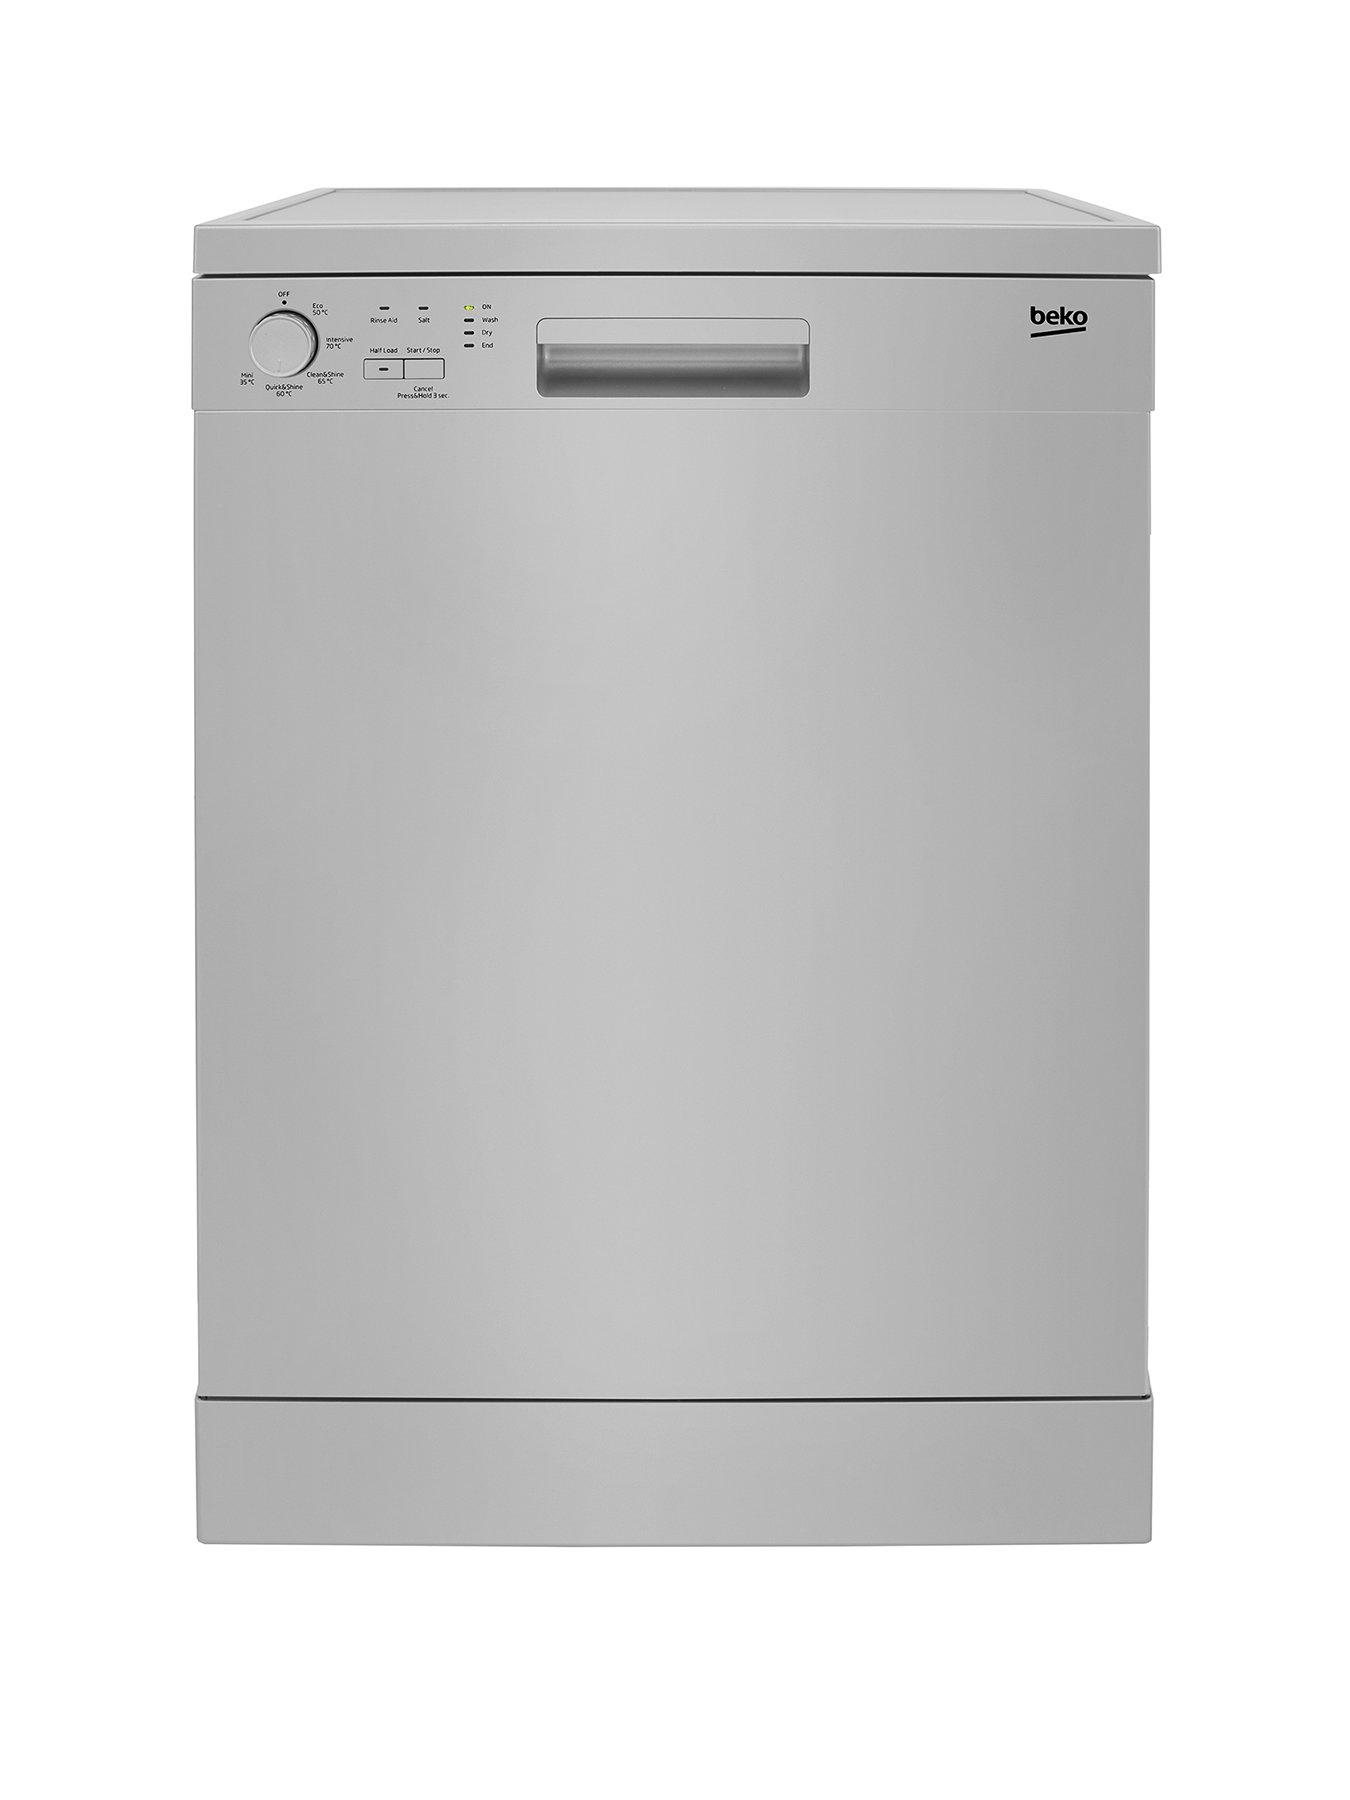 Beko Dfn05310S 13-Place Freestanding Fullsize Dishwasher – Silver